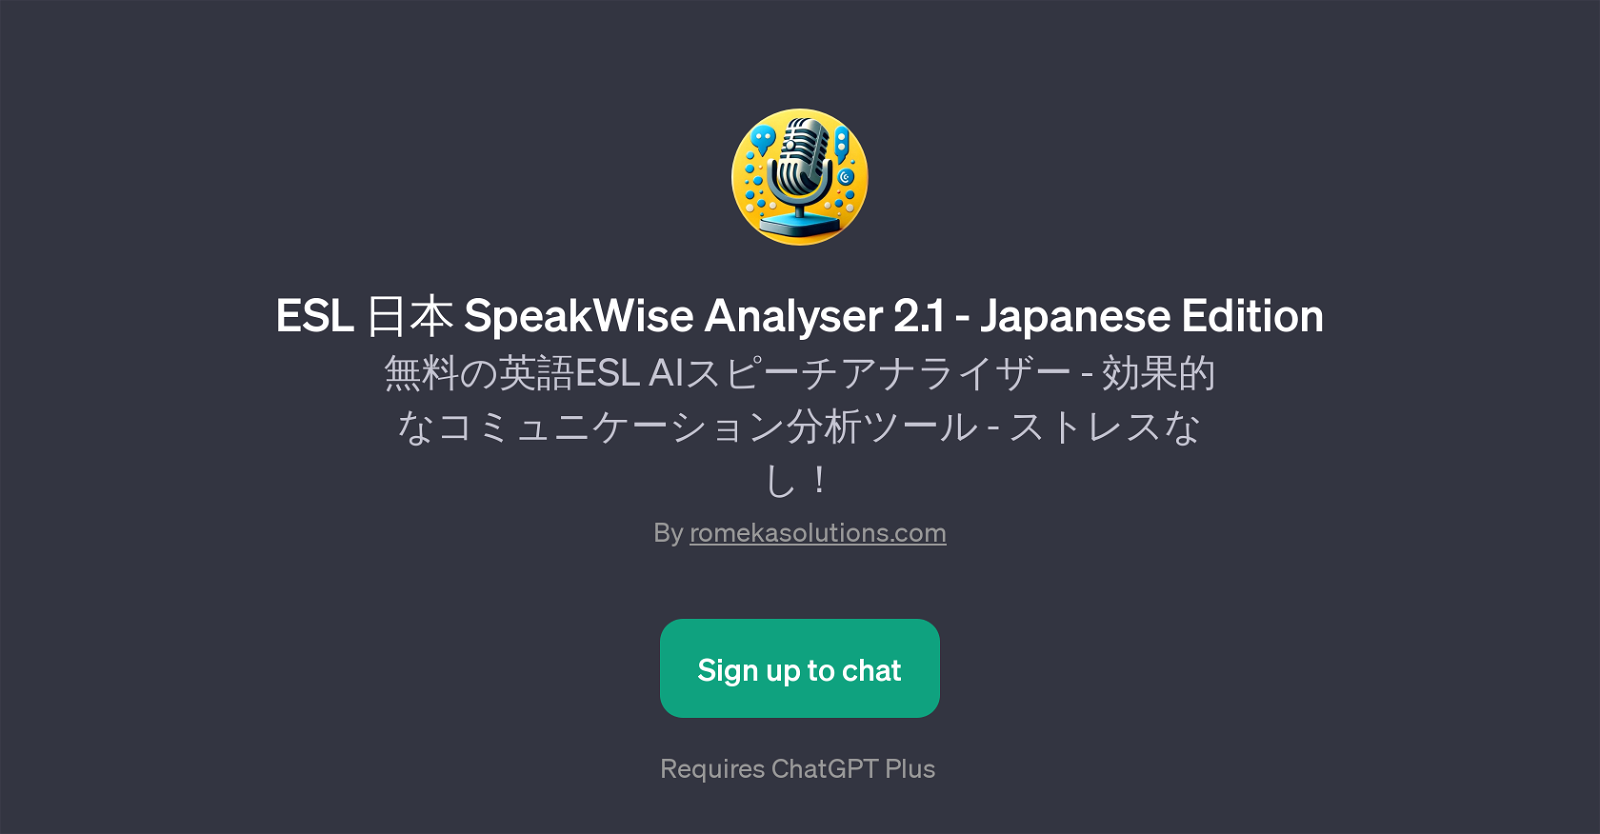 ESL  SpeakWise Analyser 2.1 - Japanese Edition website